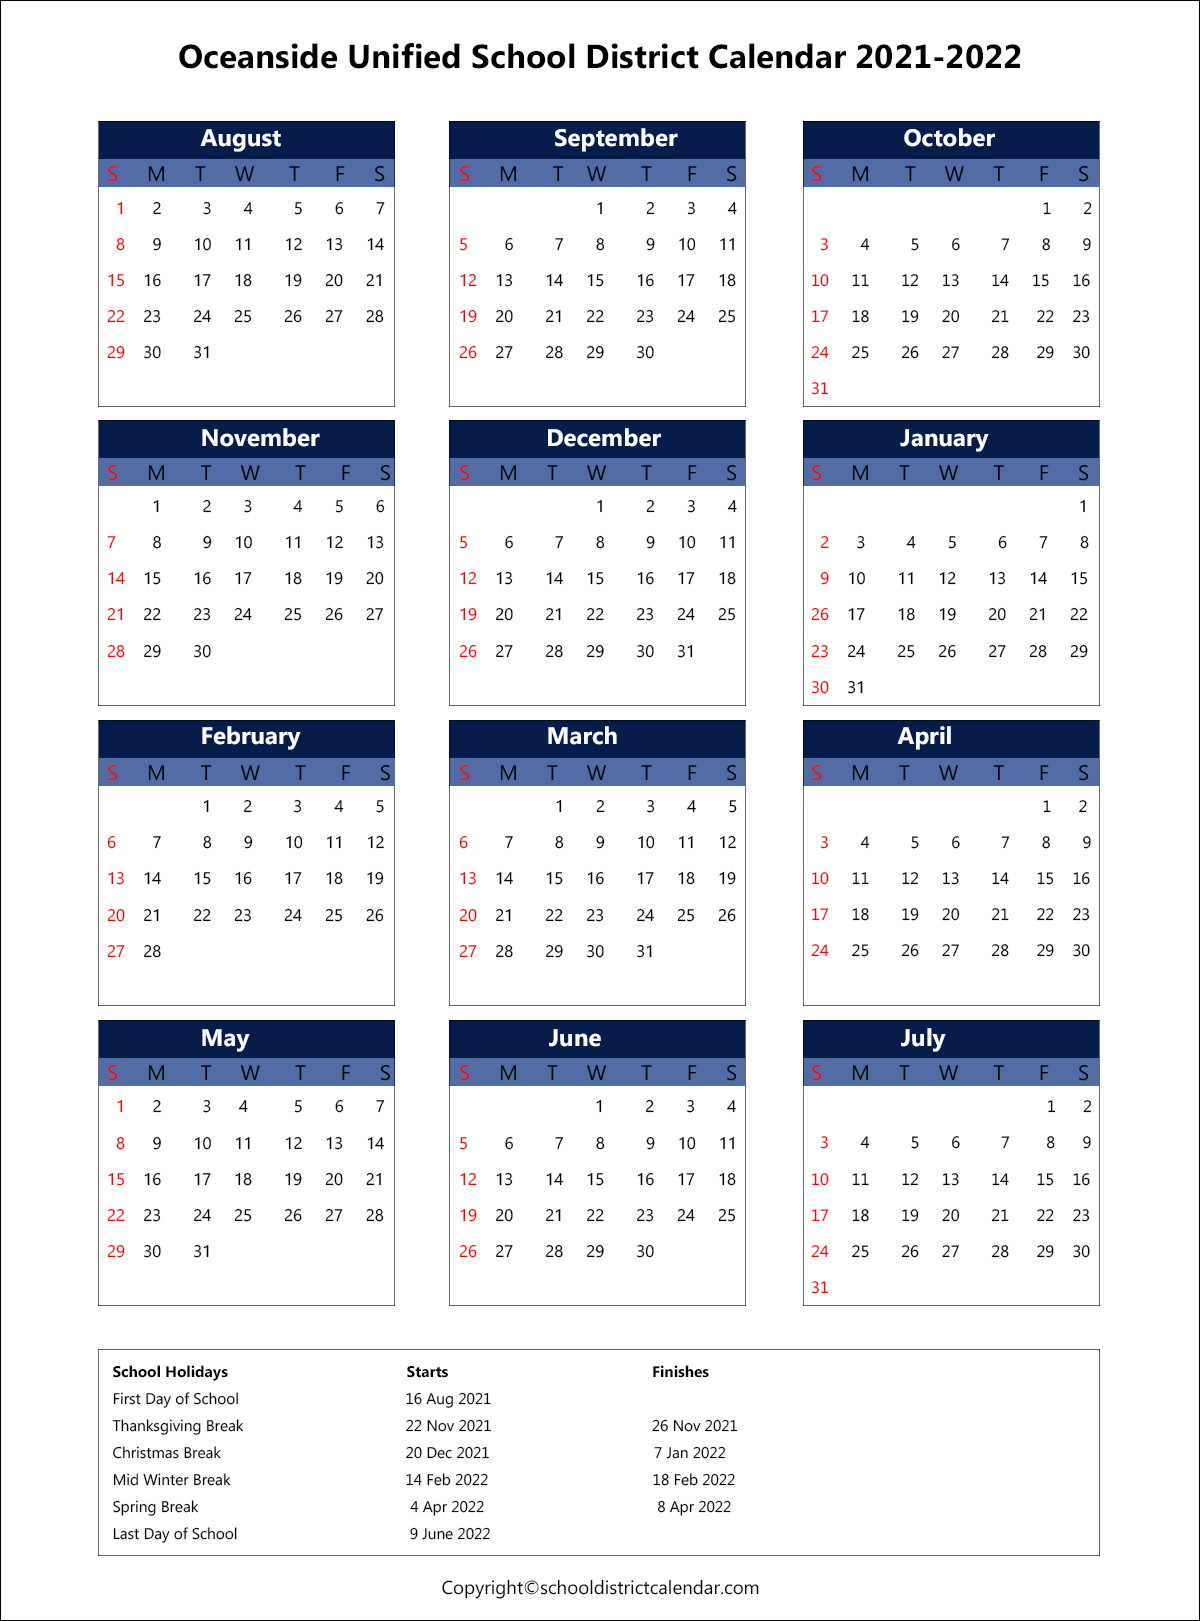 Oceanside Unified School District Calendar 2021